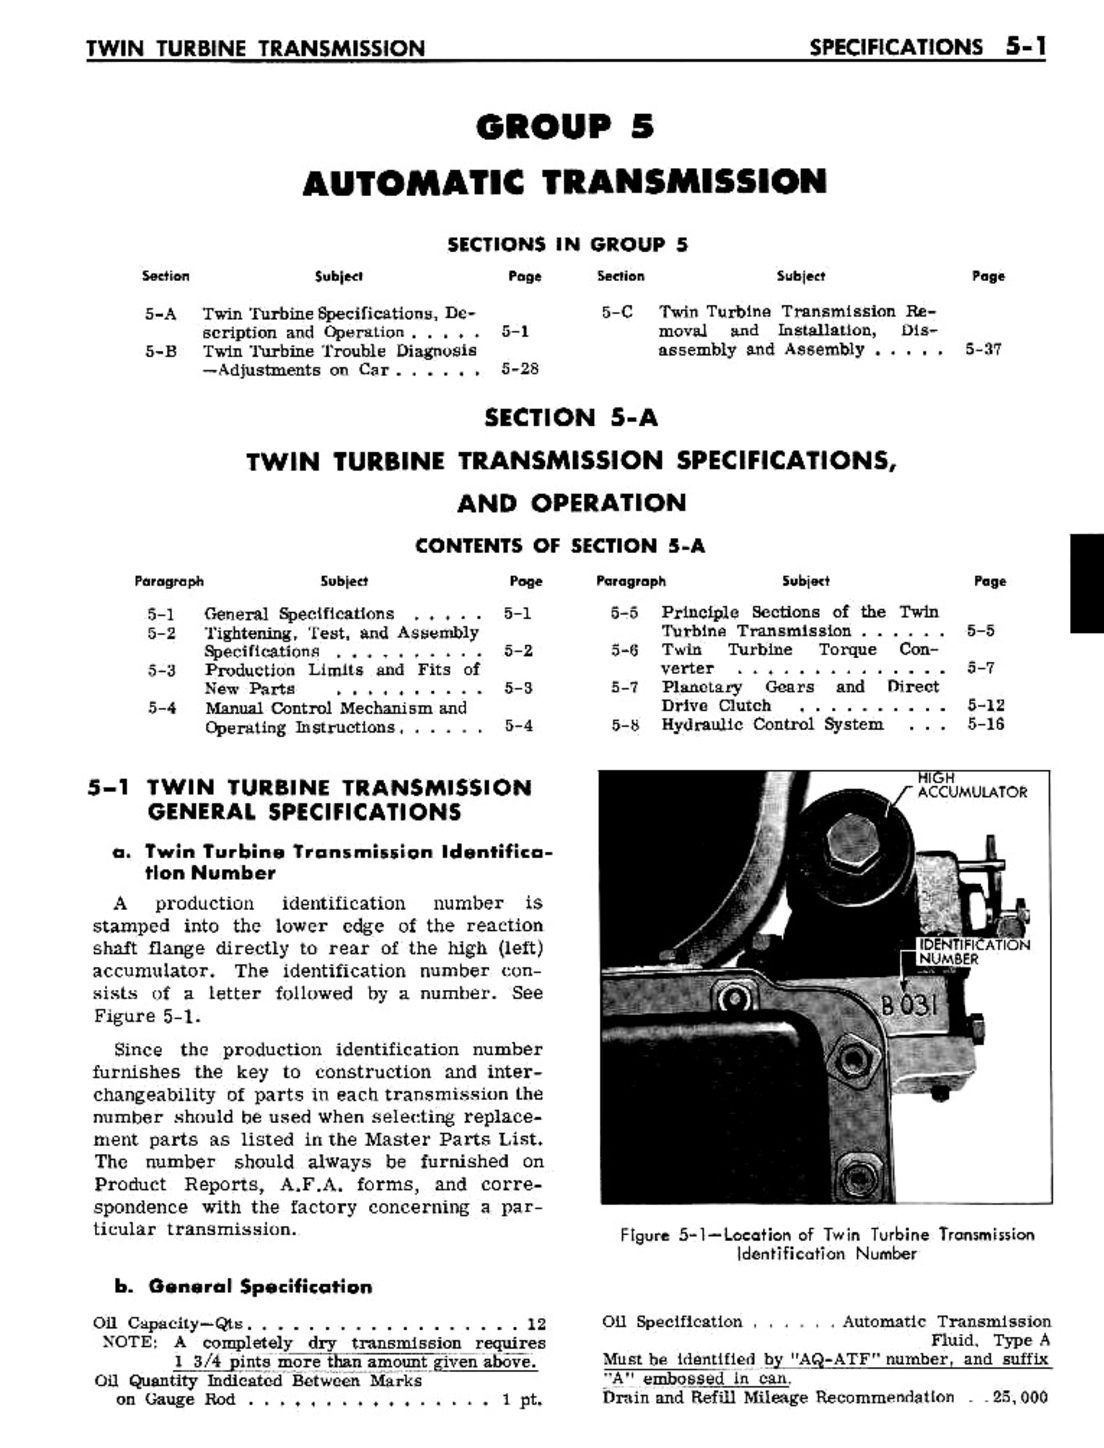 n_05 1961 Buick Shop Manual - Auto Trans-001-001.jpg